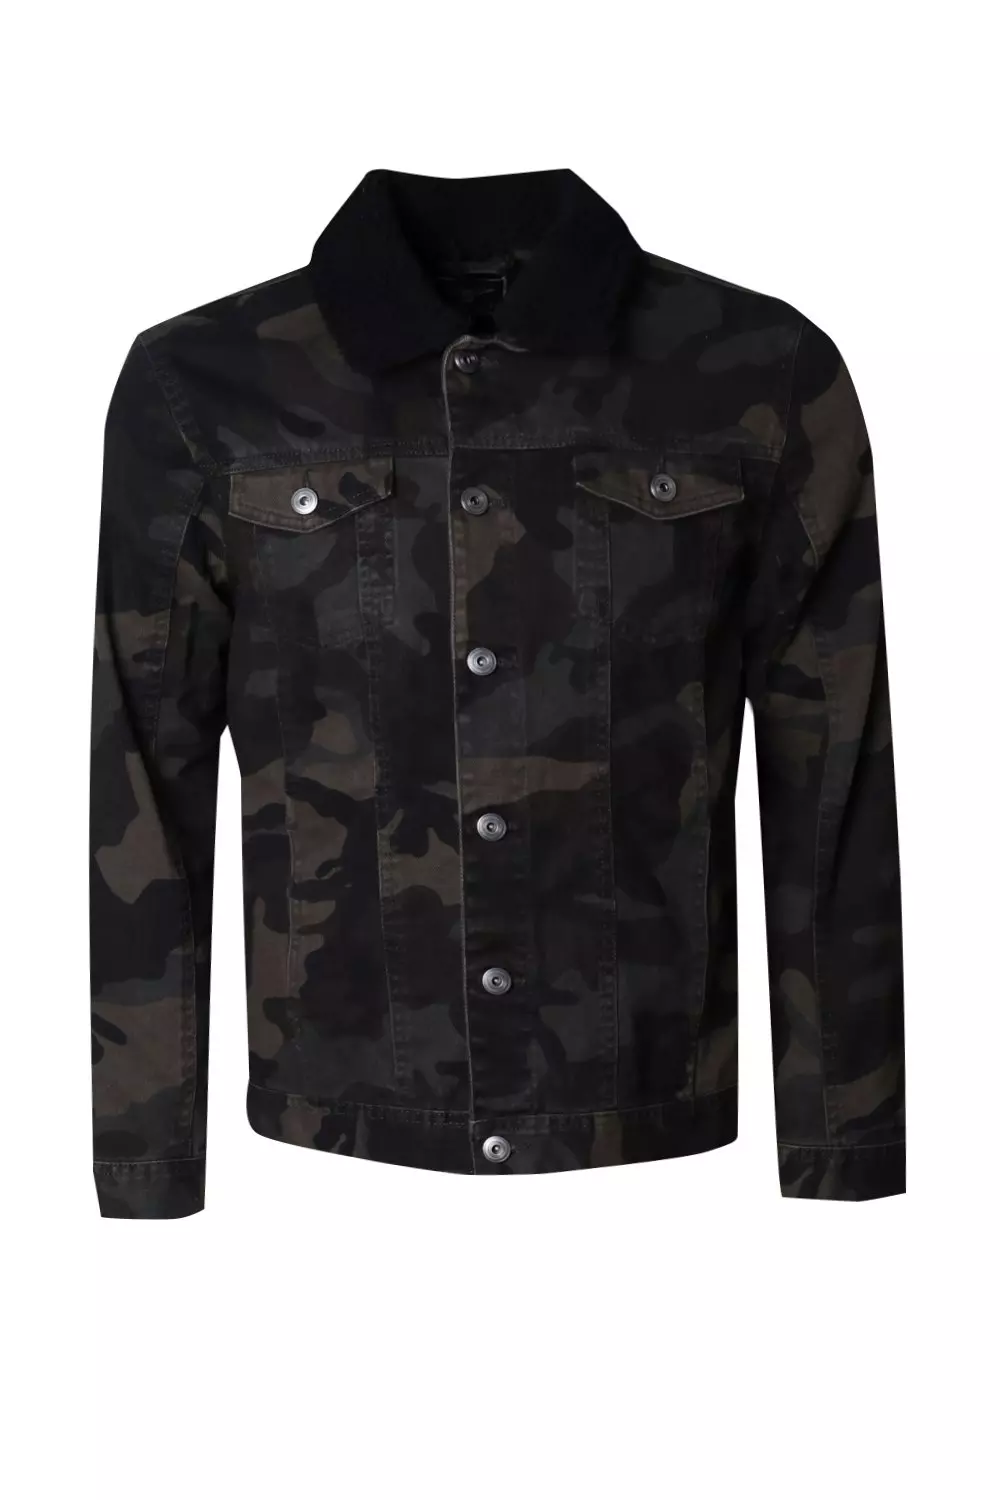 Hoxton Denim Khaki Denim Jacket With Borg Collar, $53